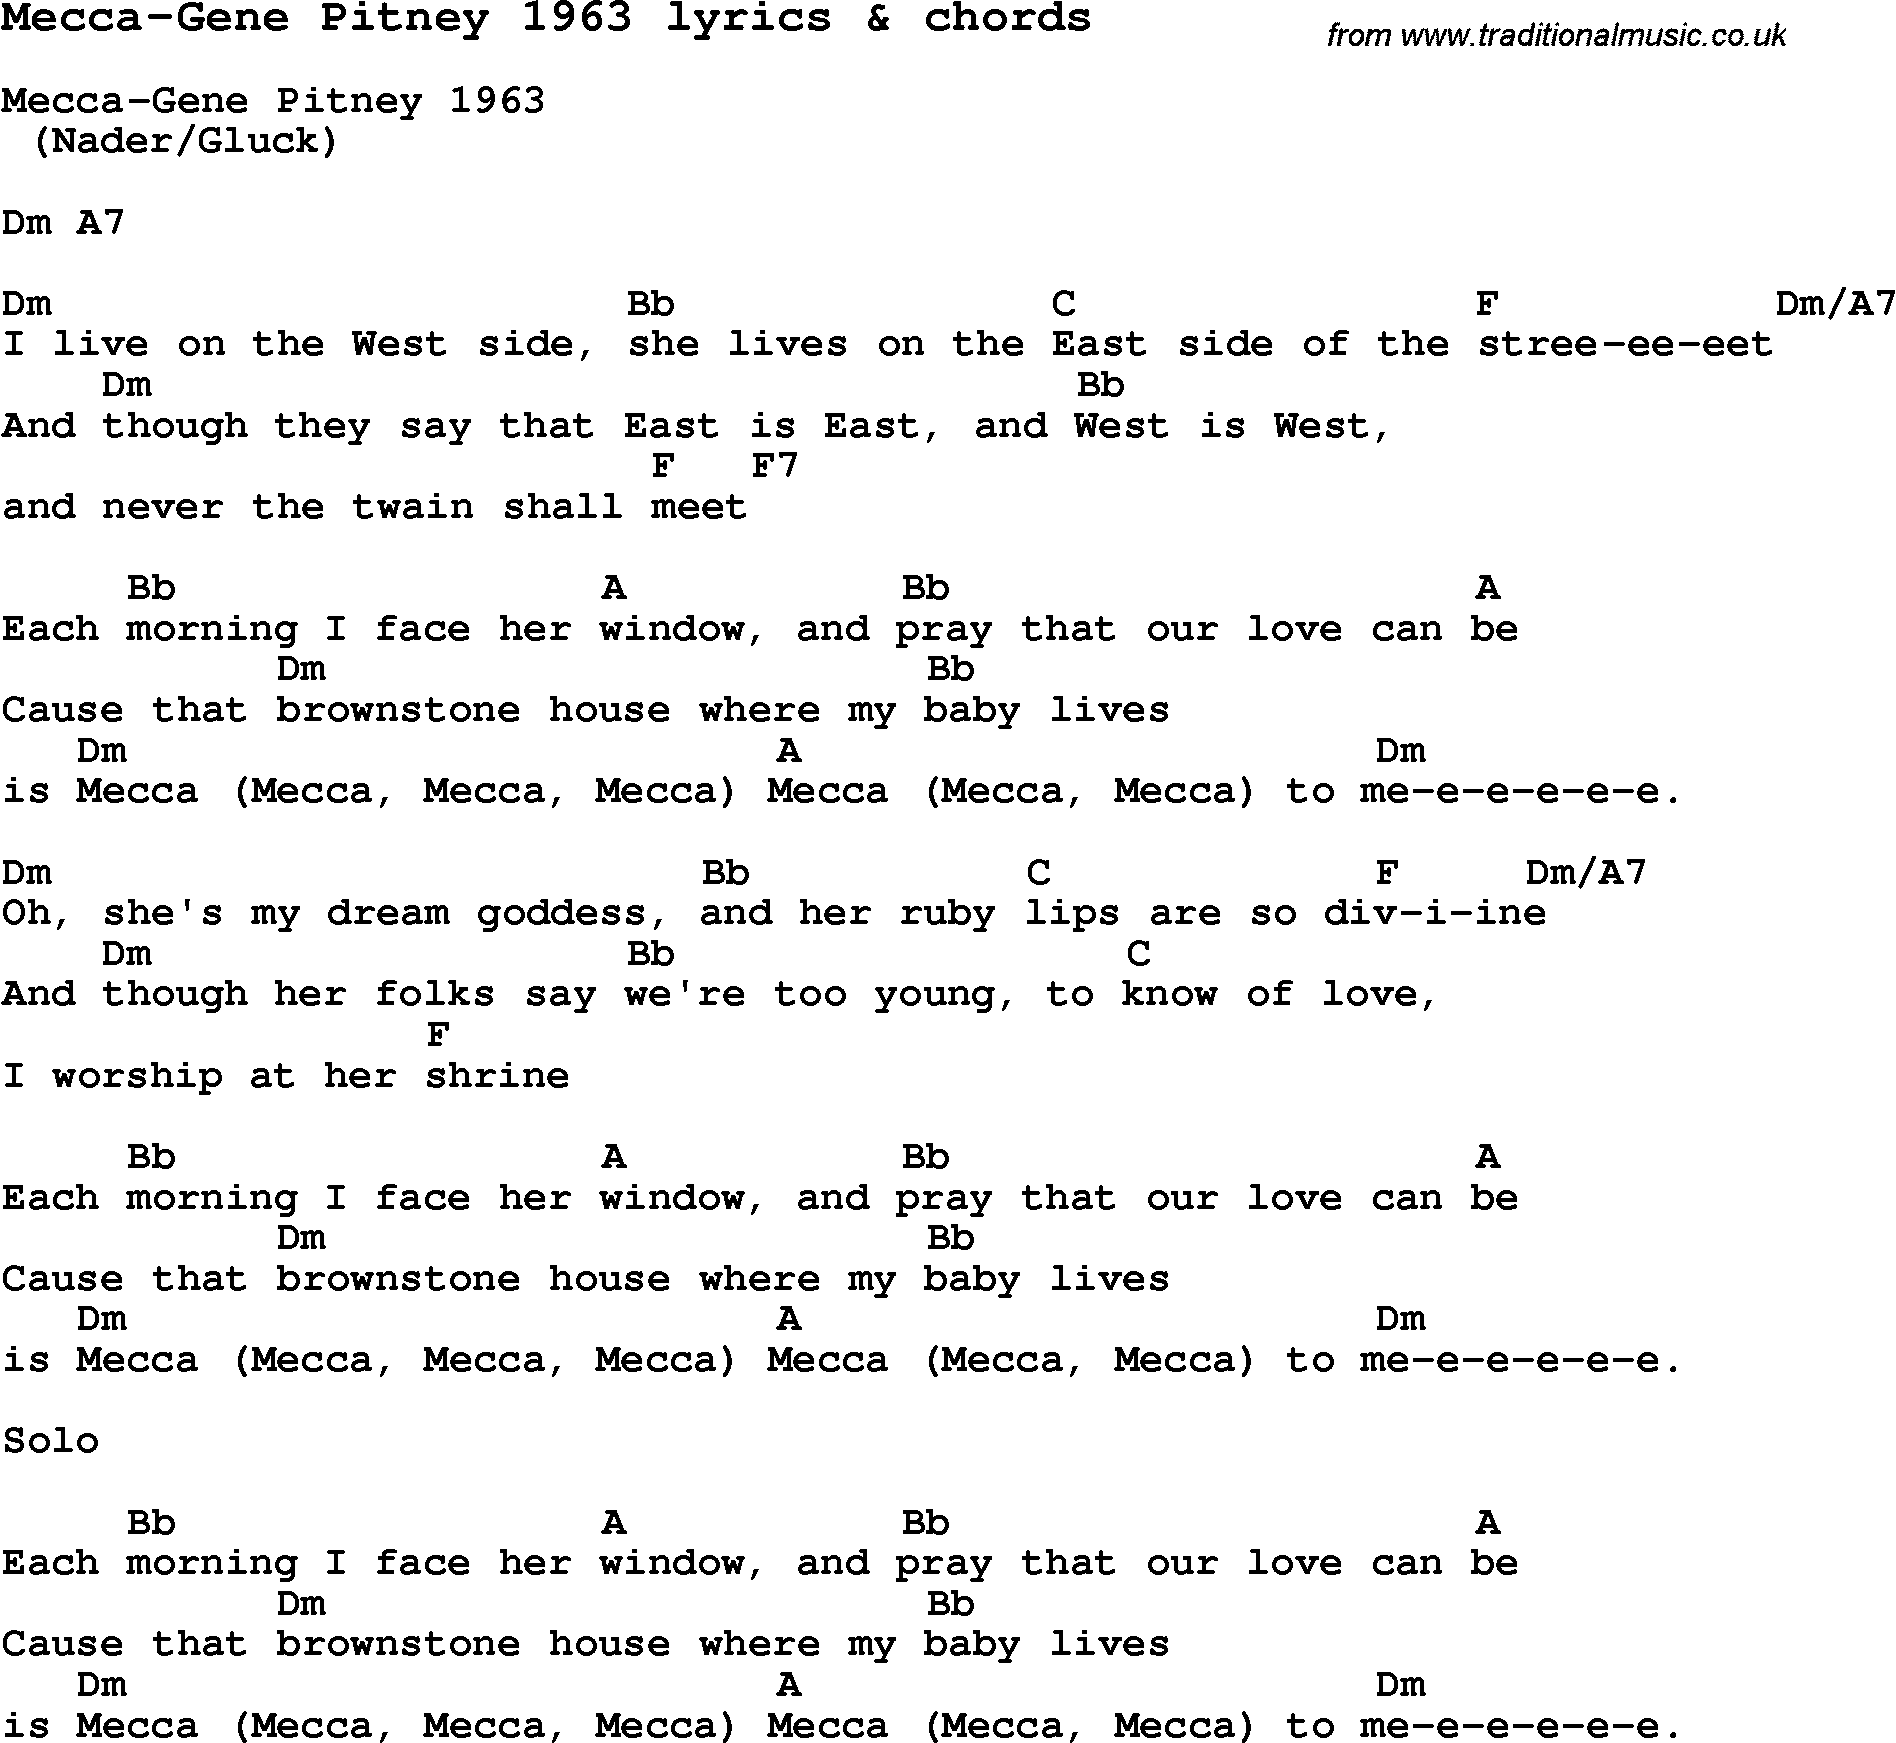 Love Song Lyrics for: Mecca-Gene Pitney 1963 with chords for Ukulele, Guitar Banjo etc.